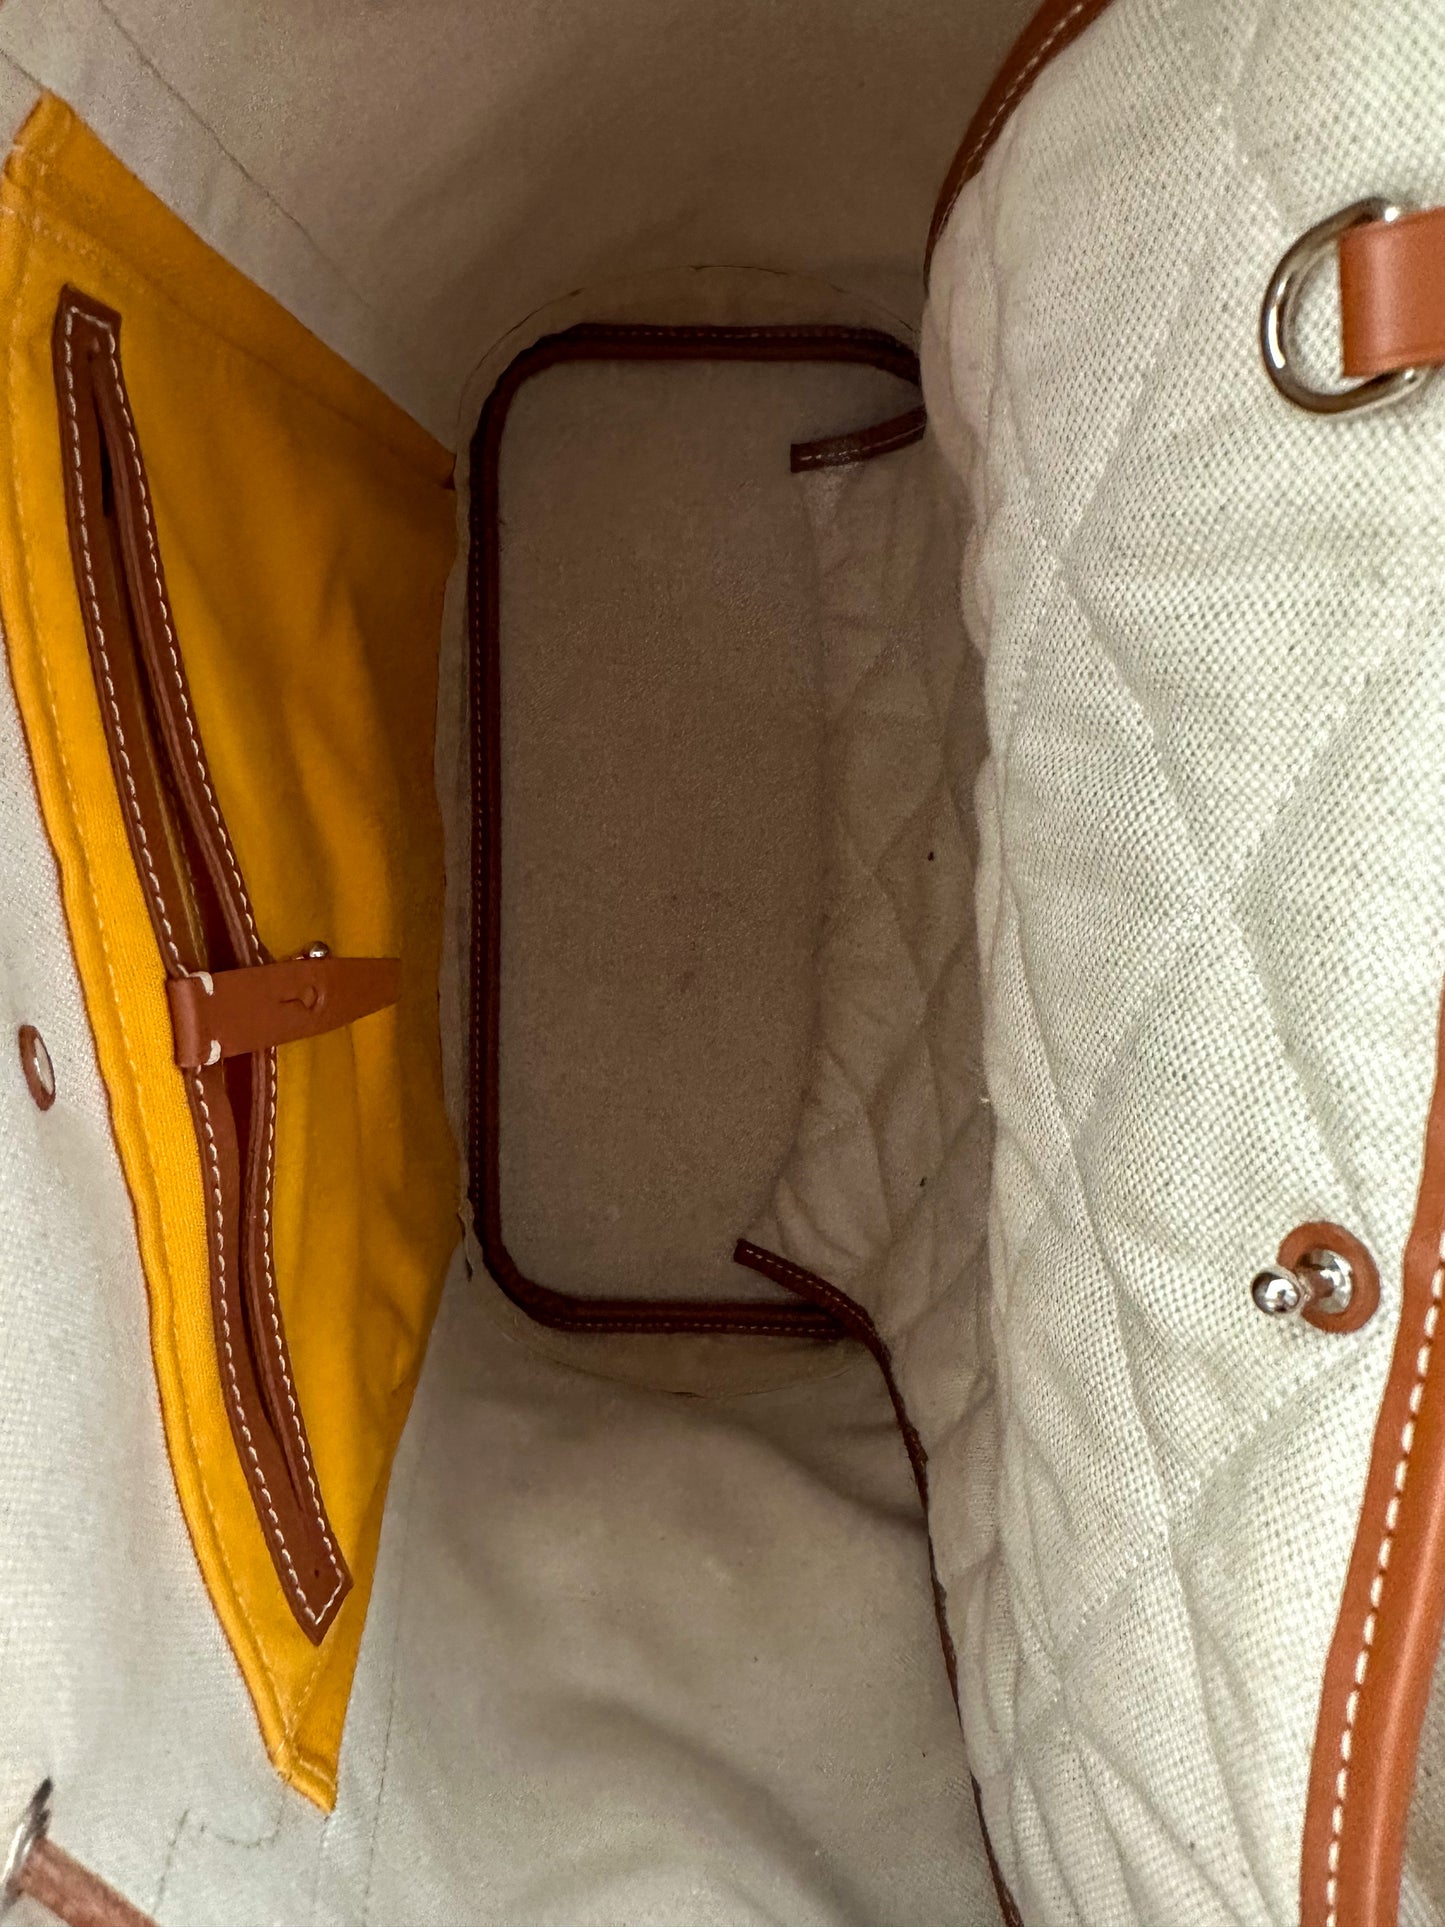 Goyard, Bags, Goyard Goyardine Alpin Backpack Excellent Condition